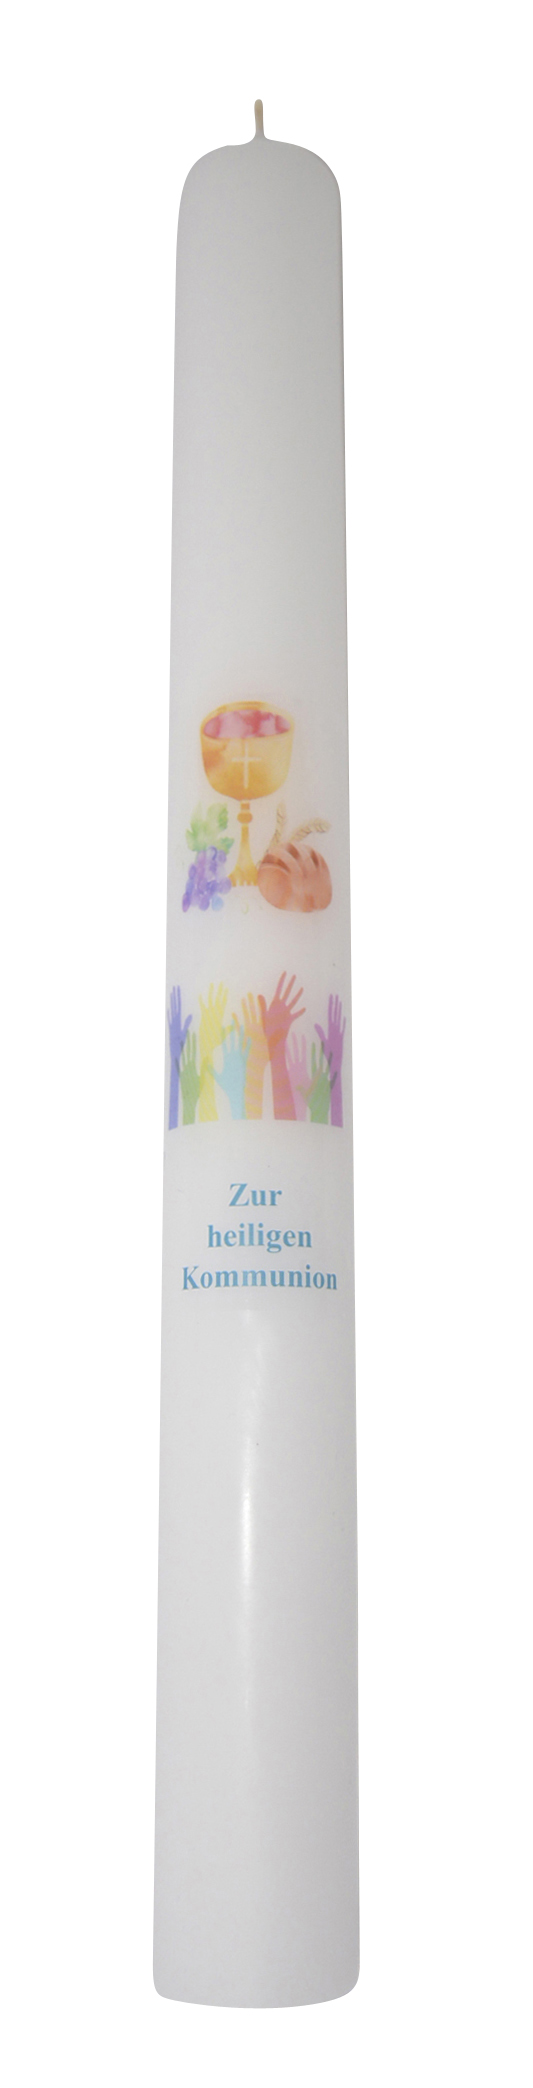 Kommunionkerze - Kelch & Kinderhände